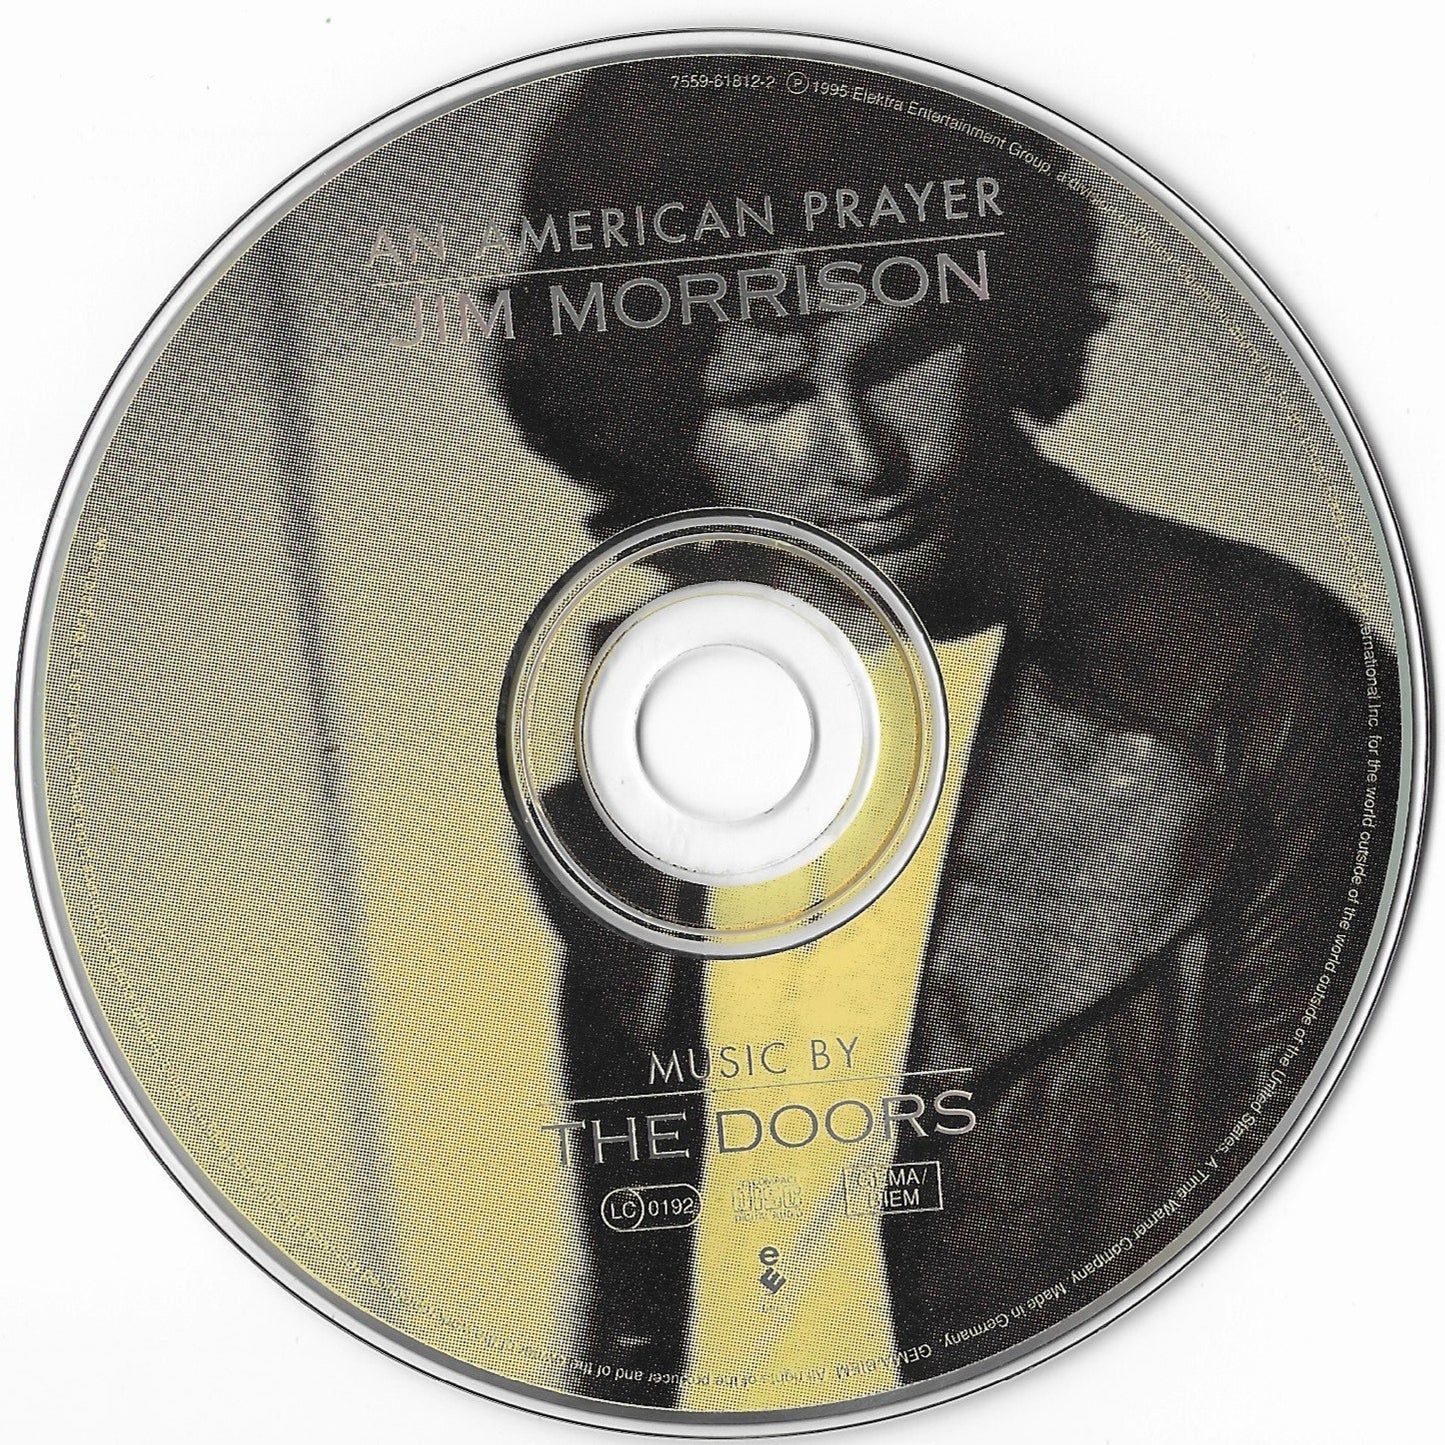 JIM MORRISON Music by The Doors - An American Prayer